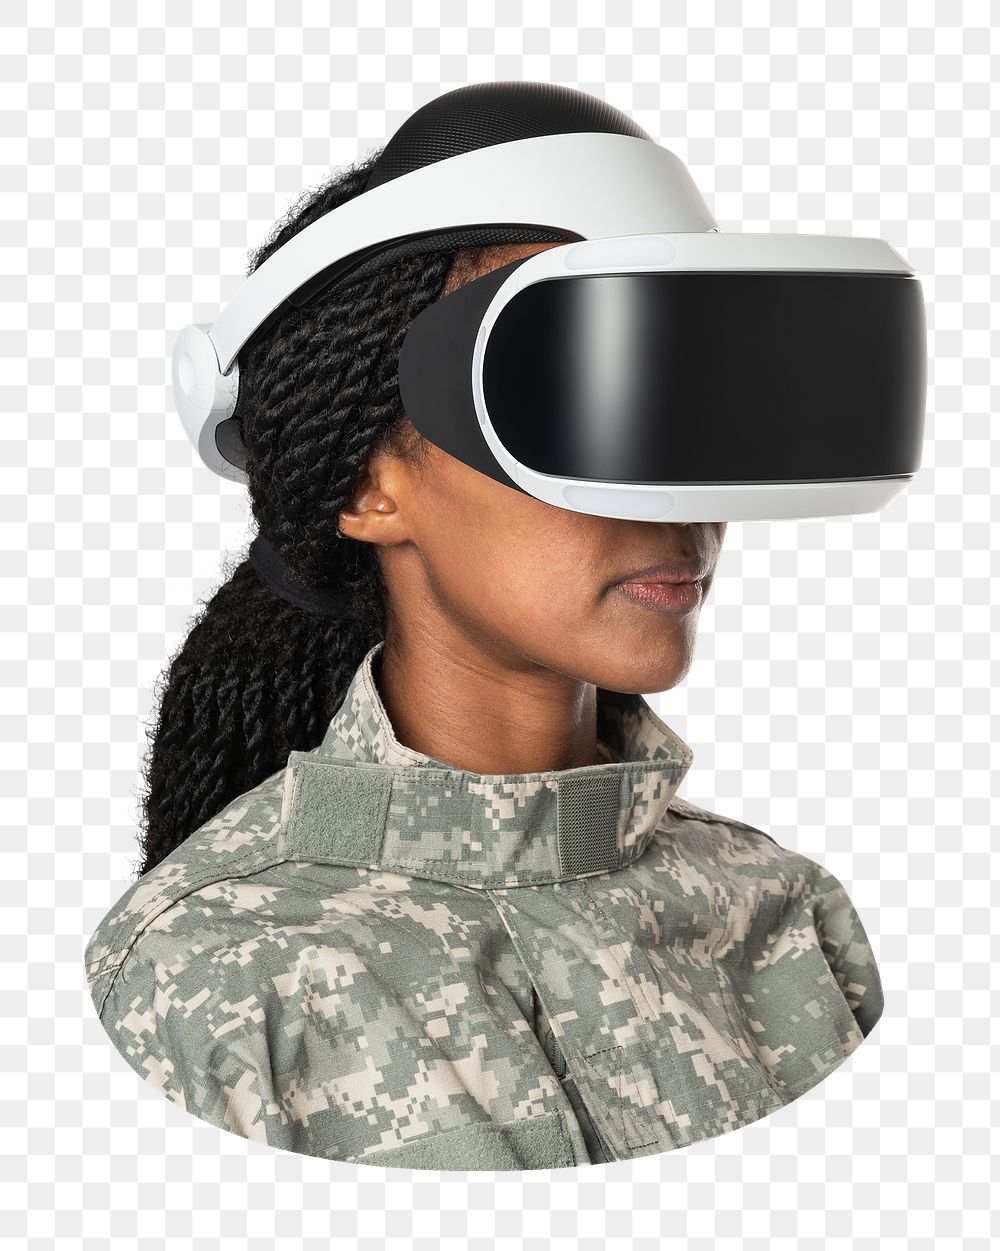 Female soldier, VR image on transparent background